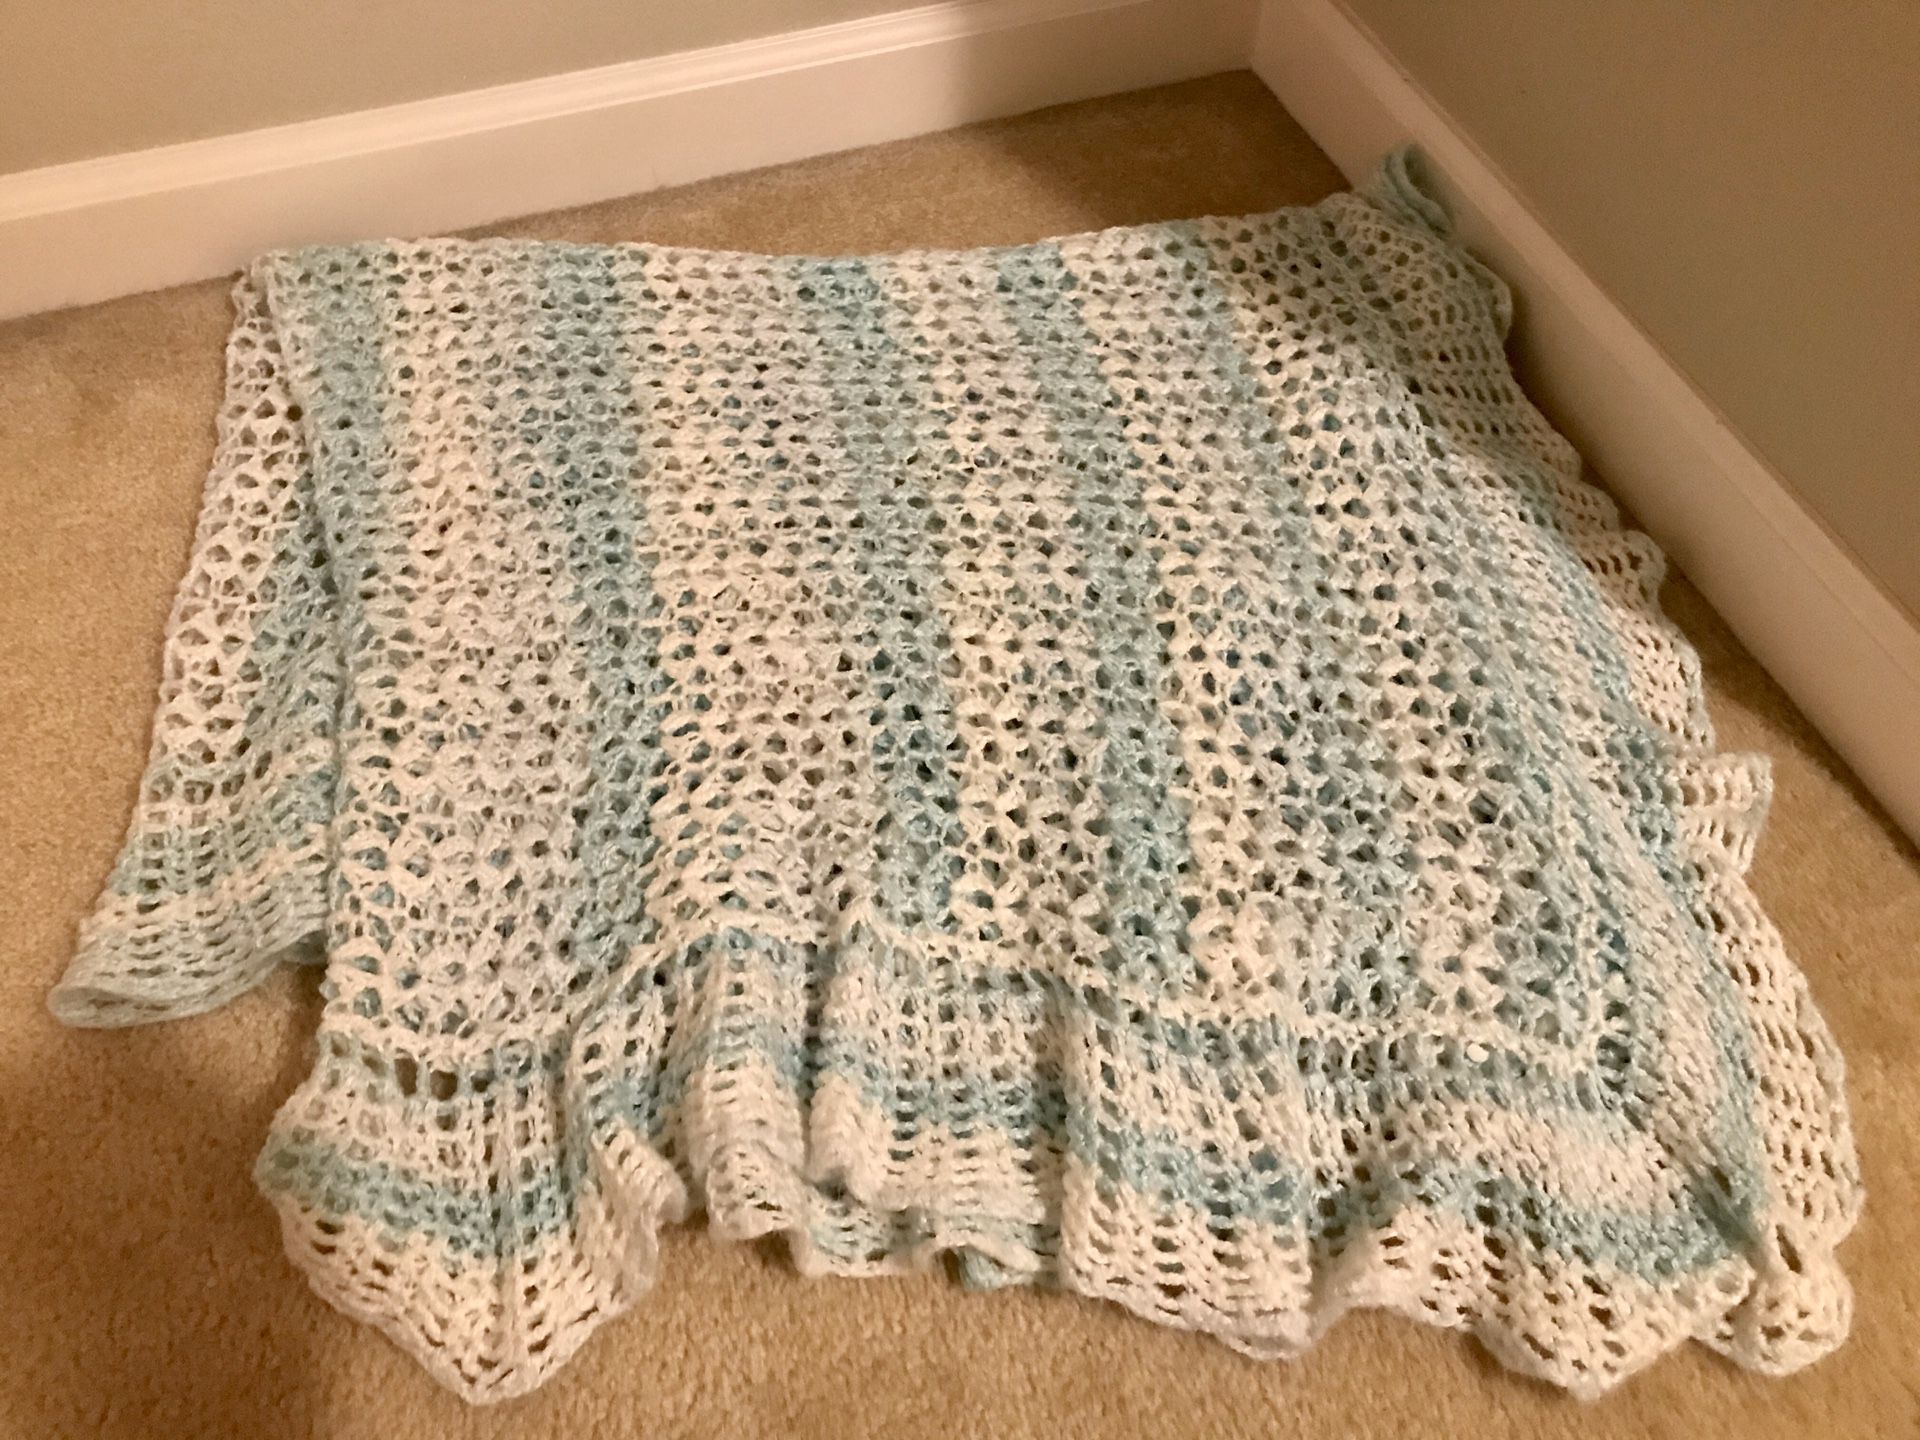 Hand crocheted baby blanket